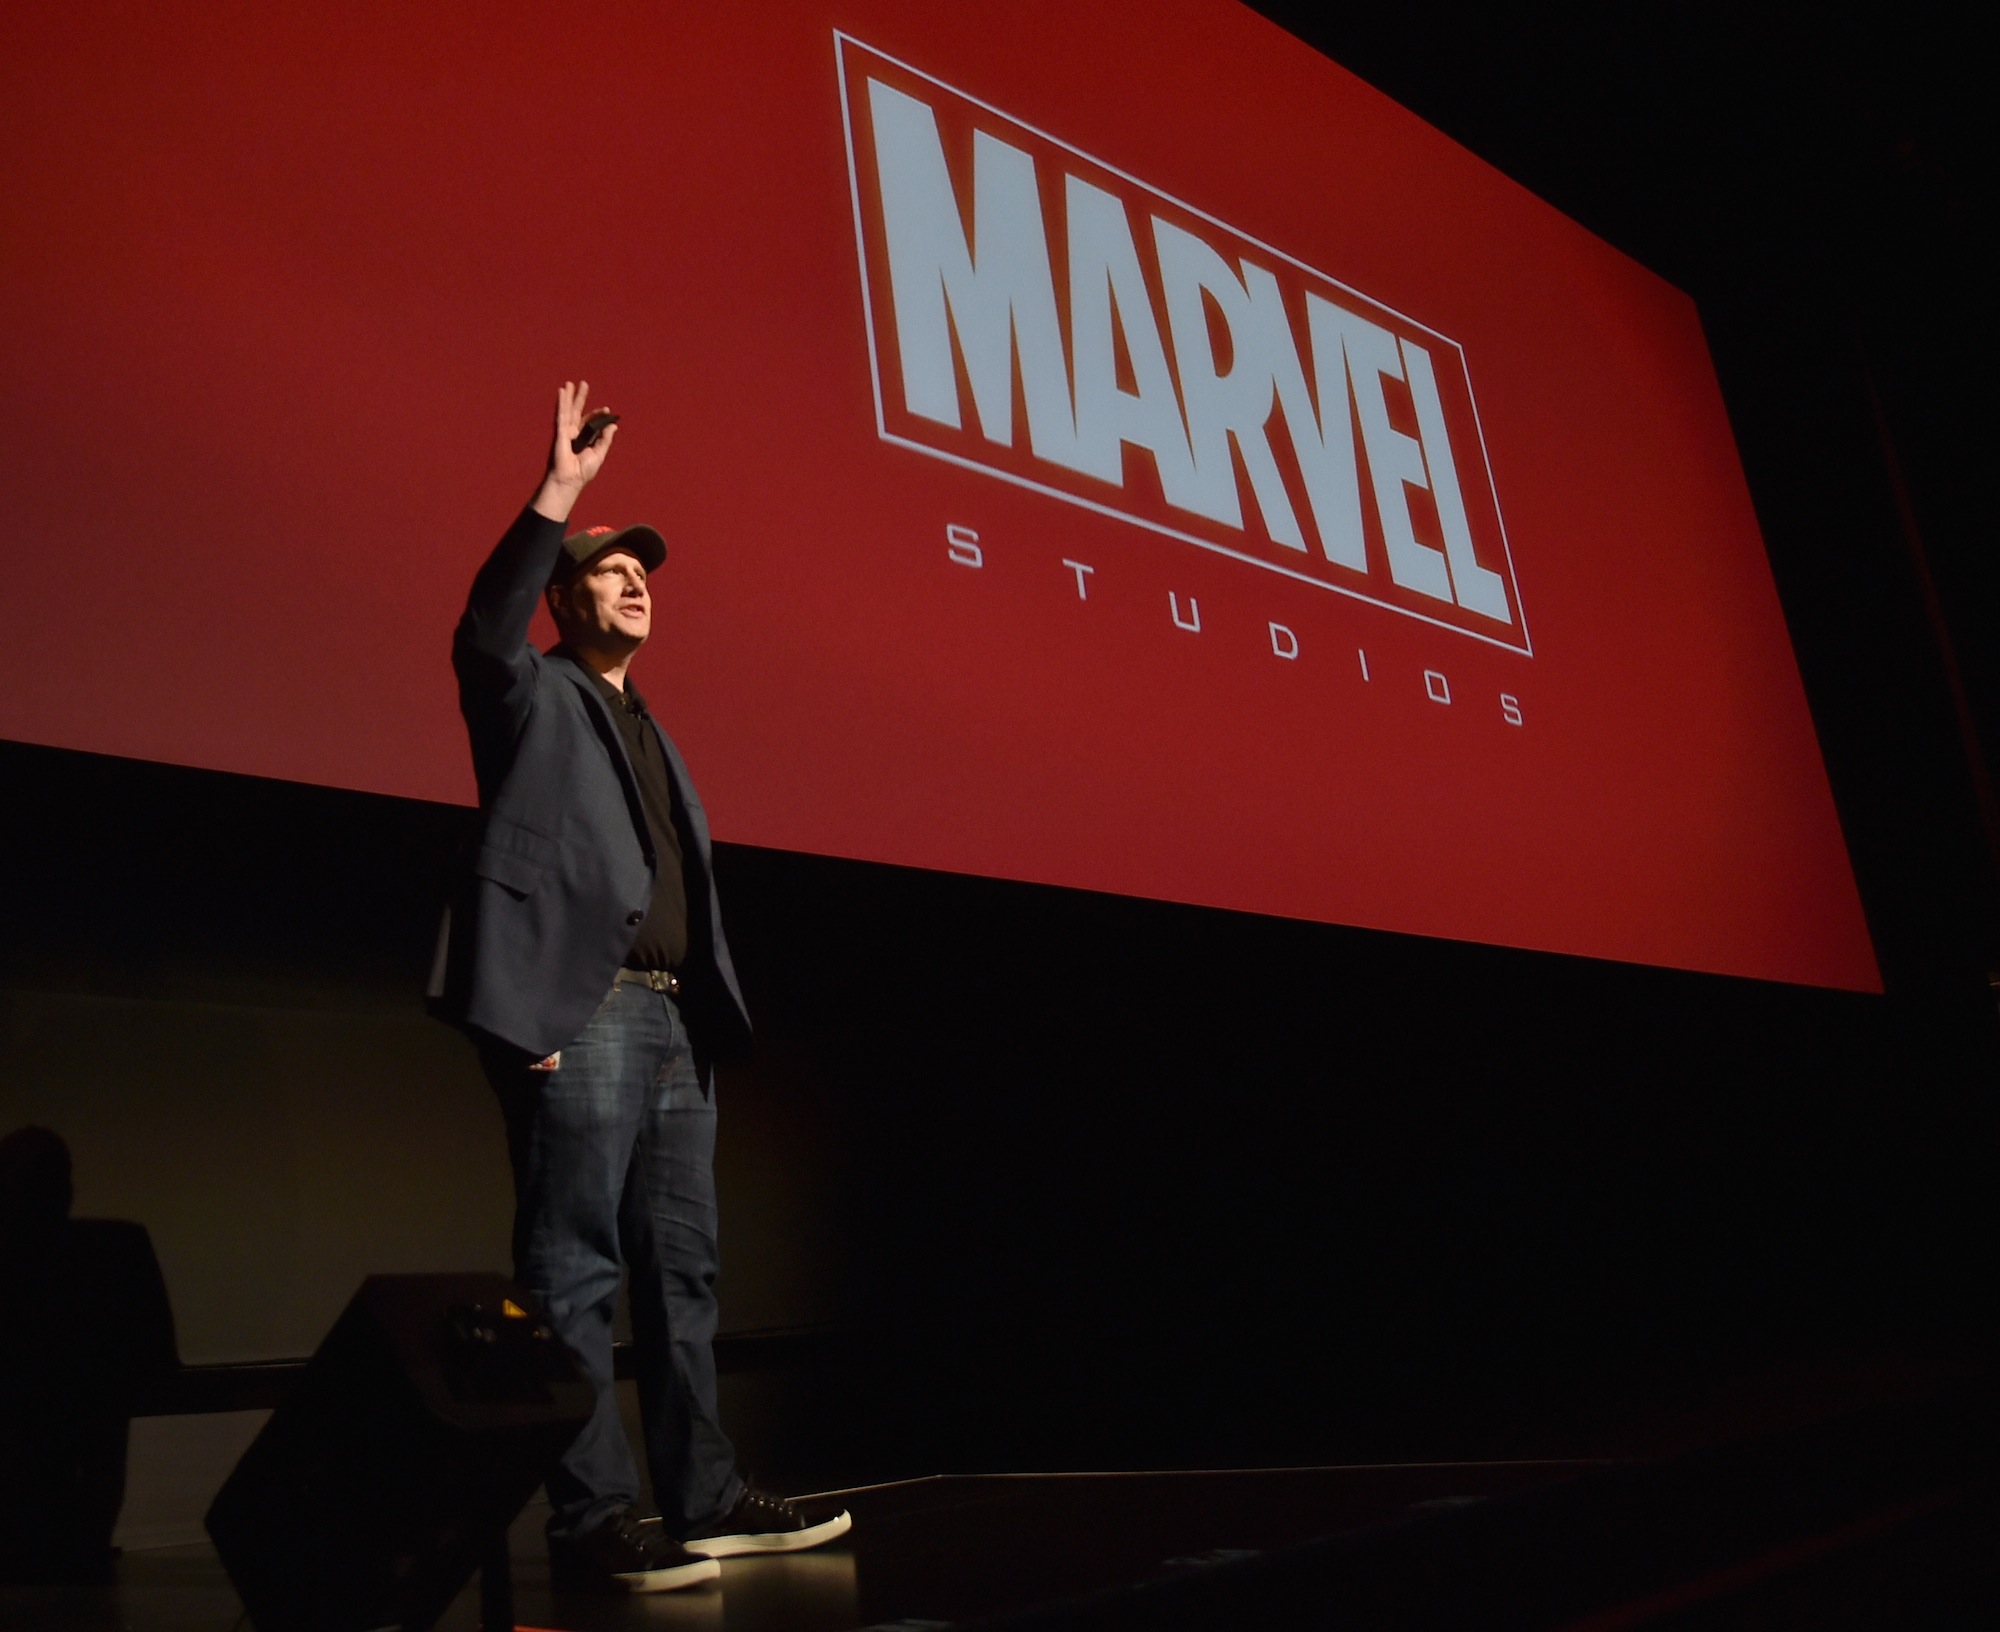 Marvel Studios Phase Three